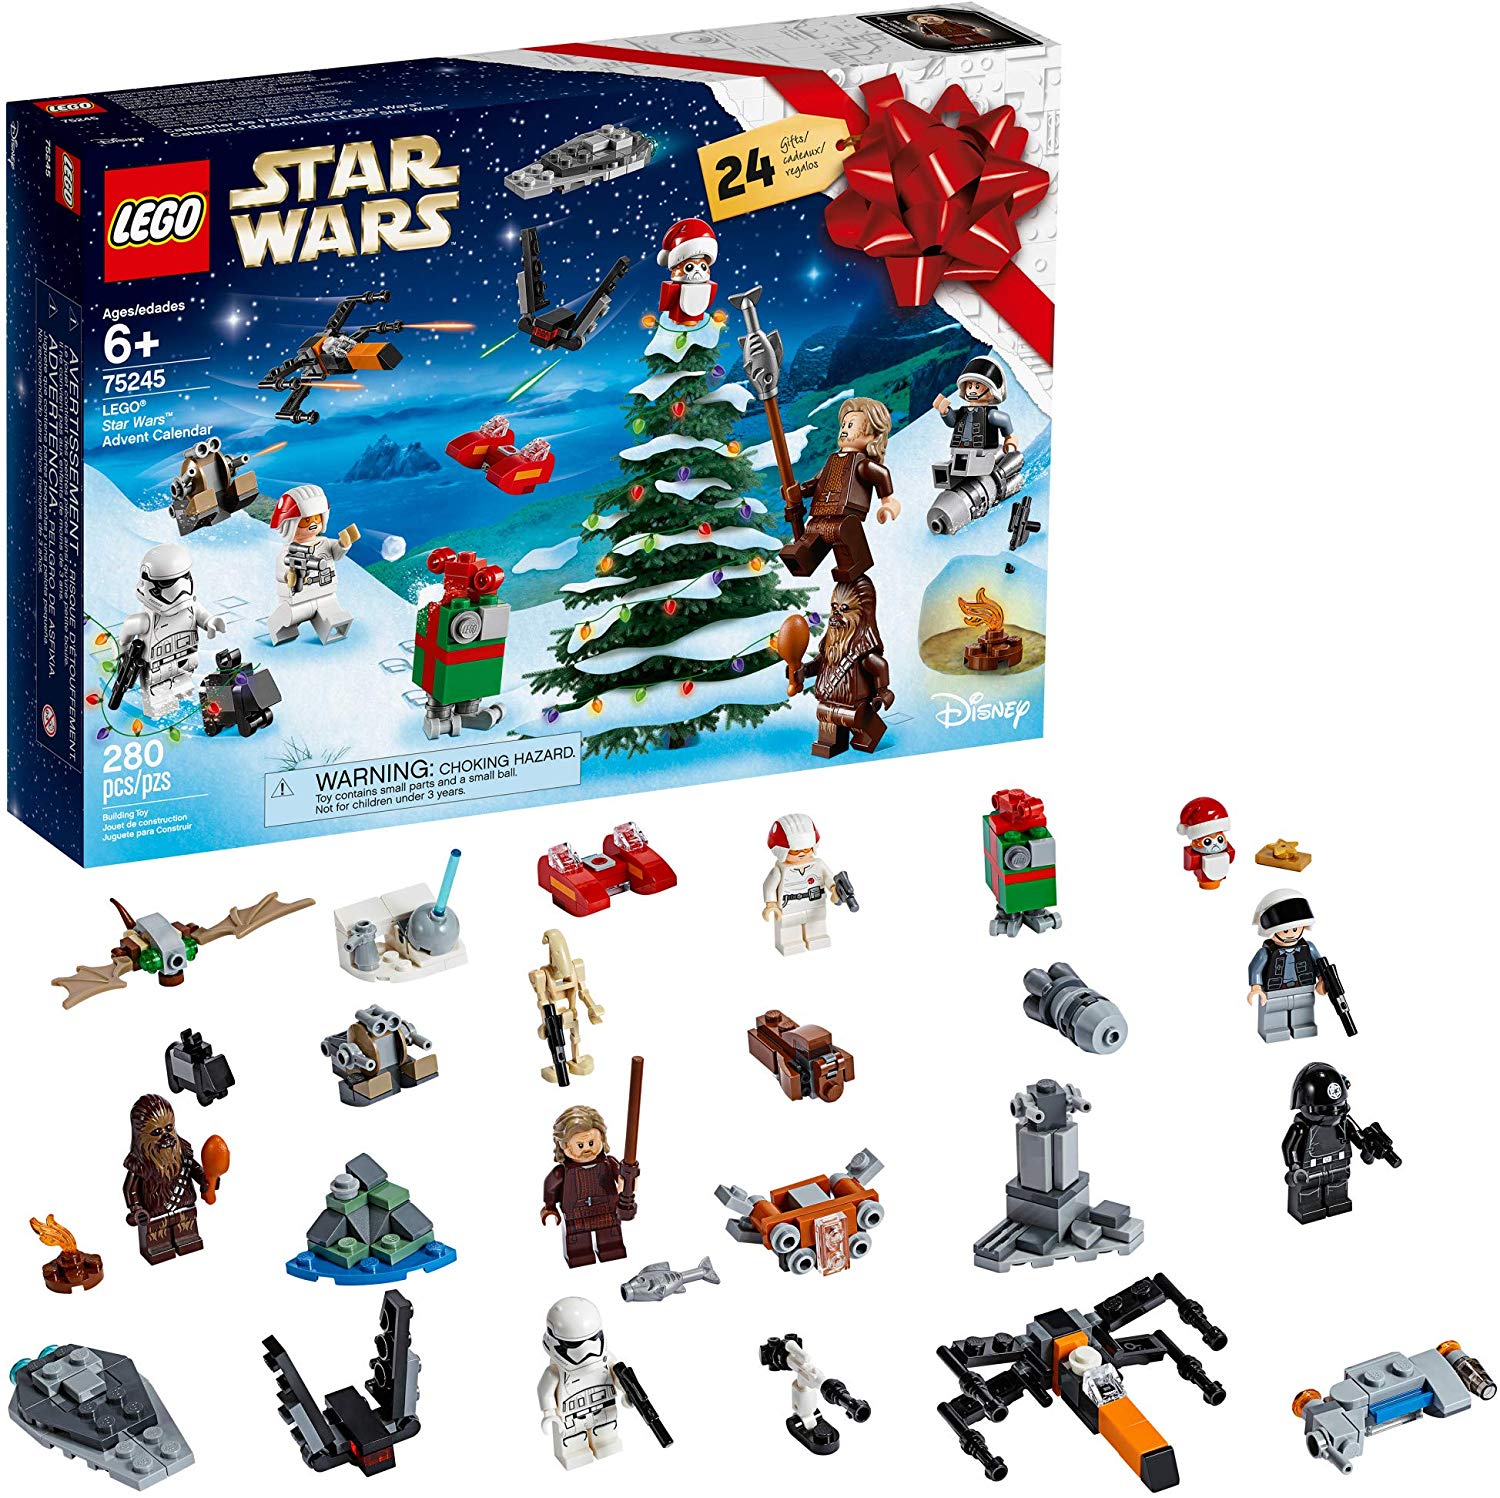 LEGO Star Wars 2019 Advent Calendar 75245 Holiday Gift Set Building Kit $24.99 (REG $39.99)